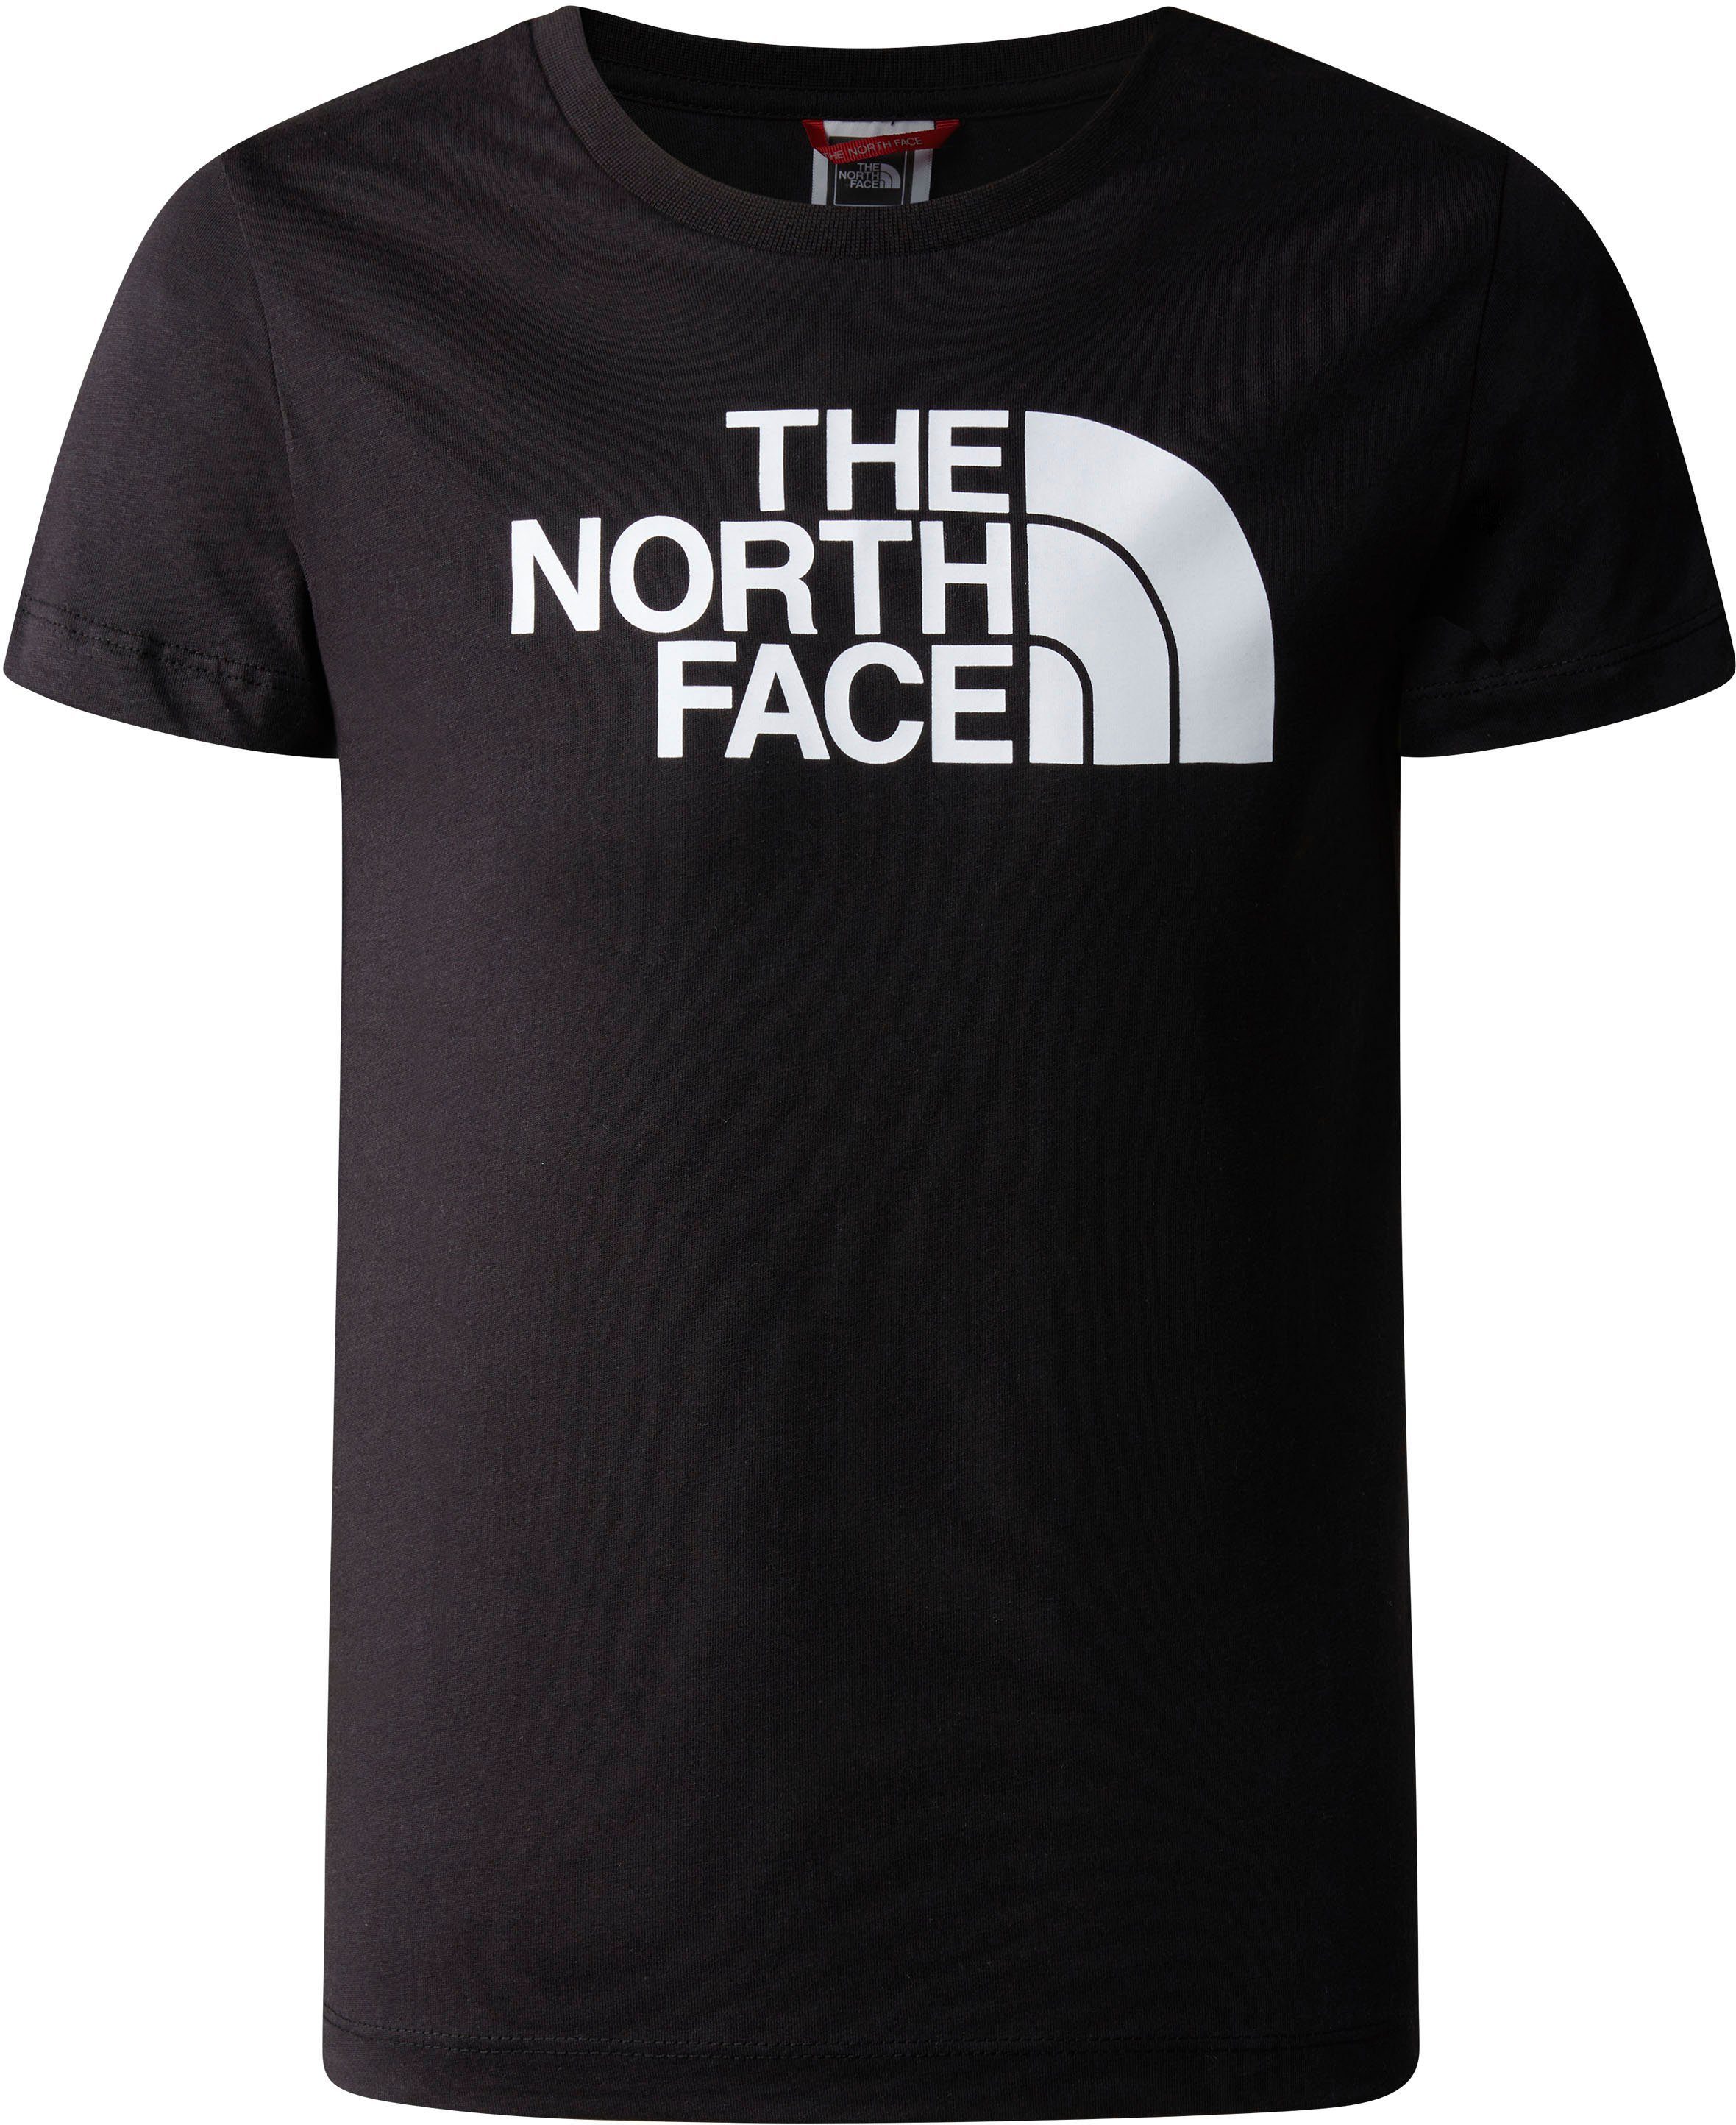 black-tn The EASY - Kinder T-Shirt tnf Face TEE für North